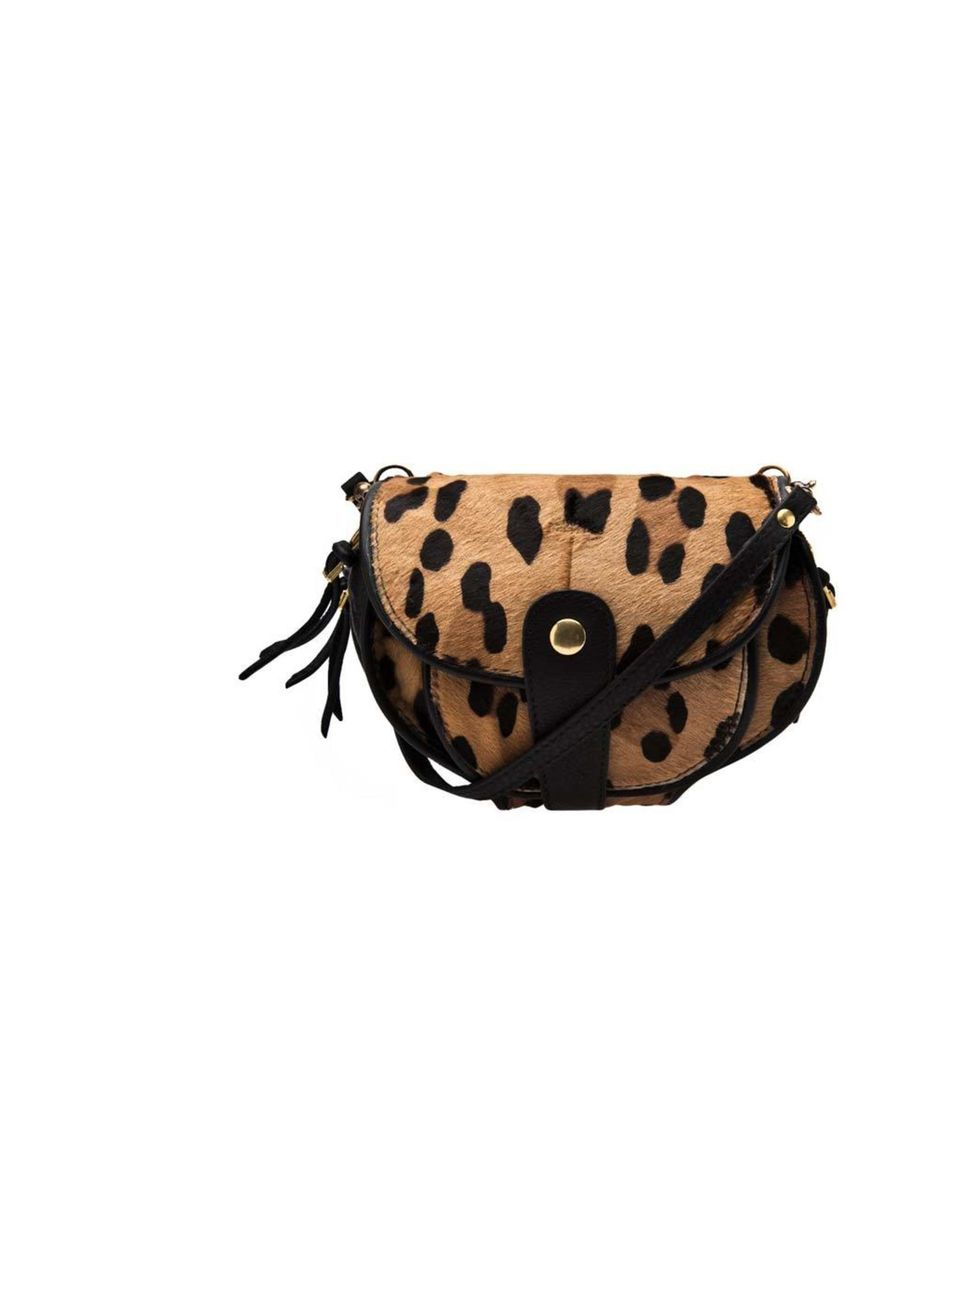 <p>Leopard print bag £443.54 Jerome Dreyfuss at <a href="http://www.farfetch.com/shopping/women/designer-jerome-dreyfuss-momo-crossbody-bag-item-10345679.aspx">FARFETCH</a></p>